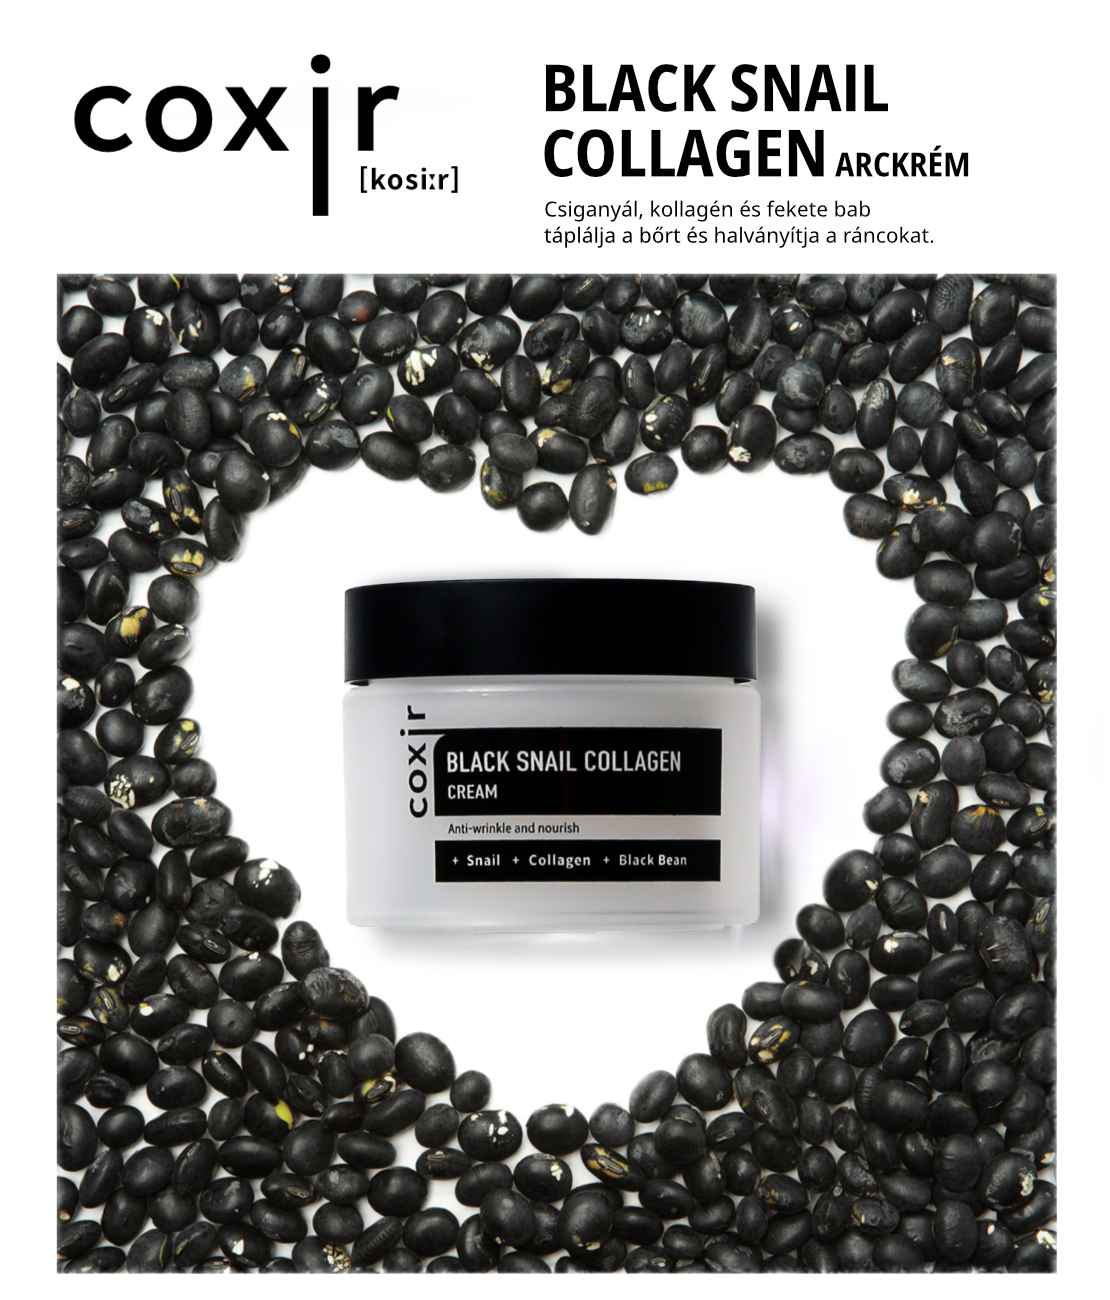 coxir-black-snail-collagen-arckrem-leiras-2.jpg